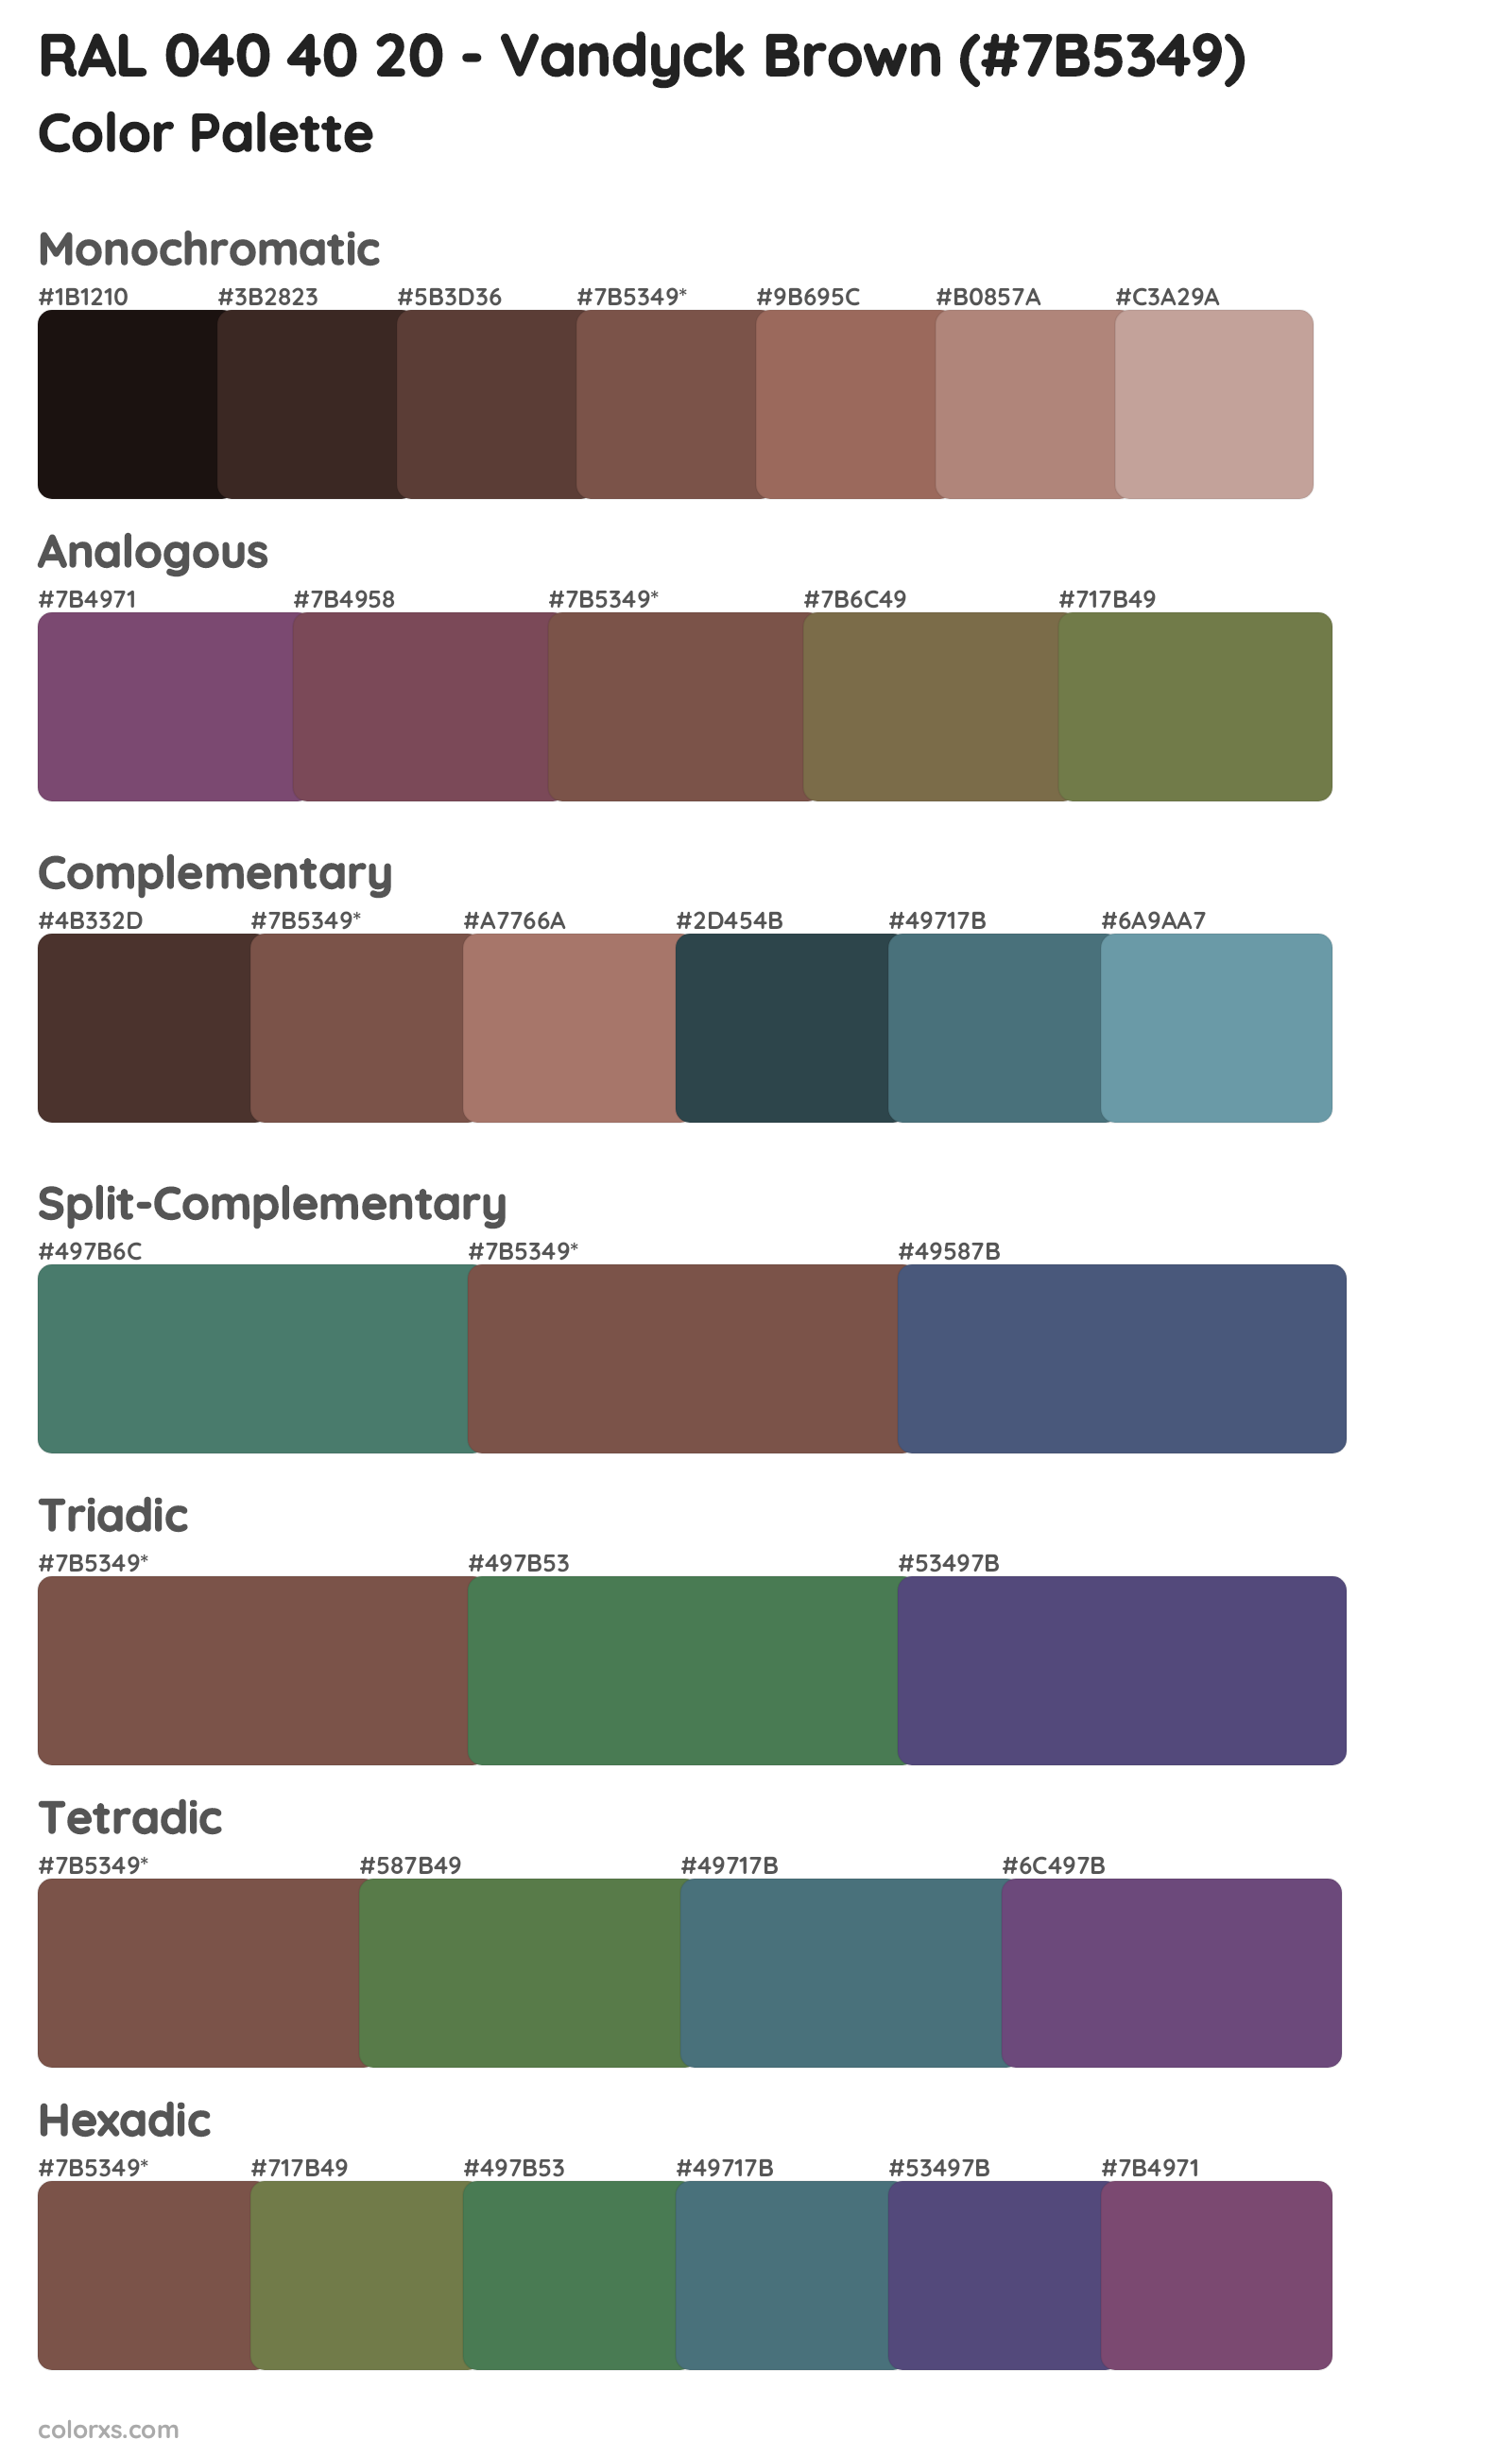 RAL 040 40 20 - Vandyck Brown Color Scheme Palettes